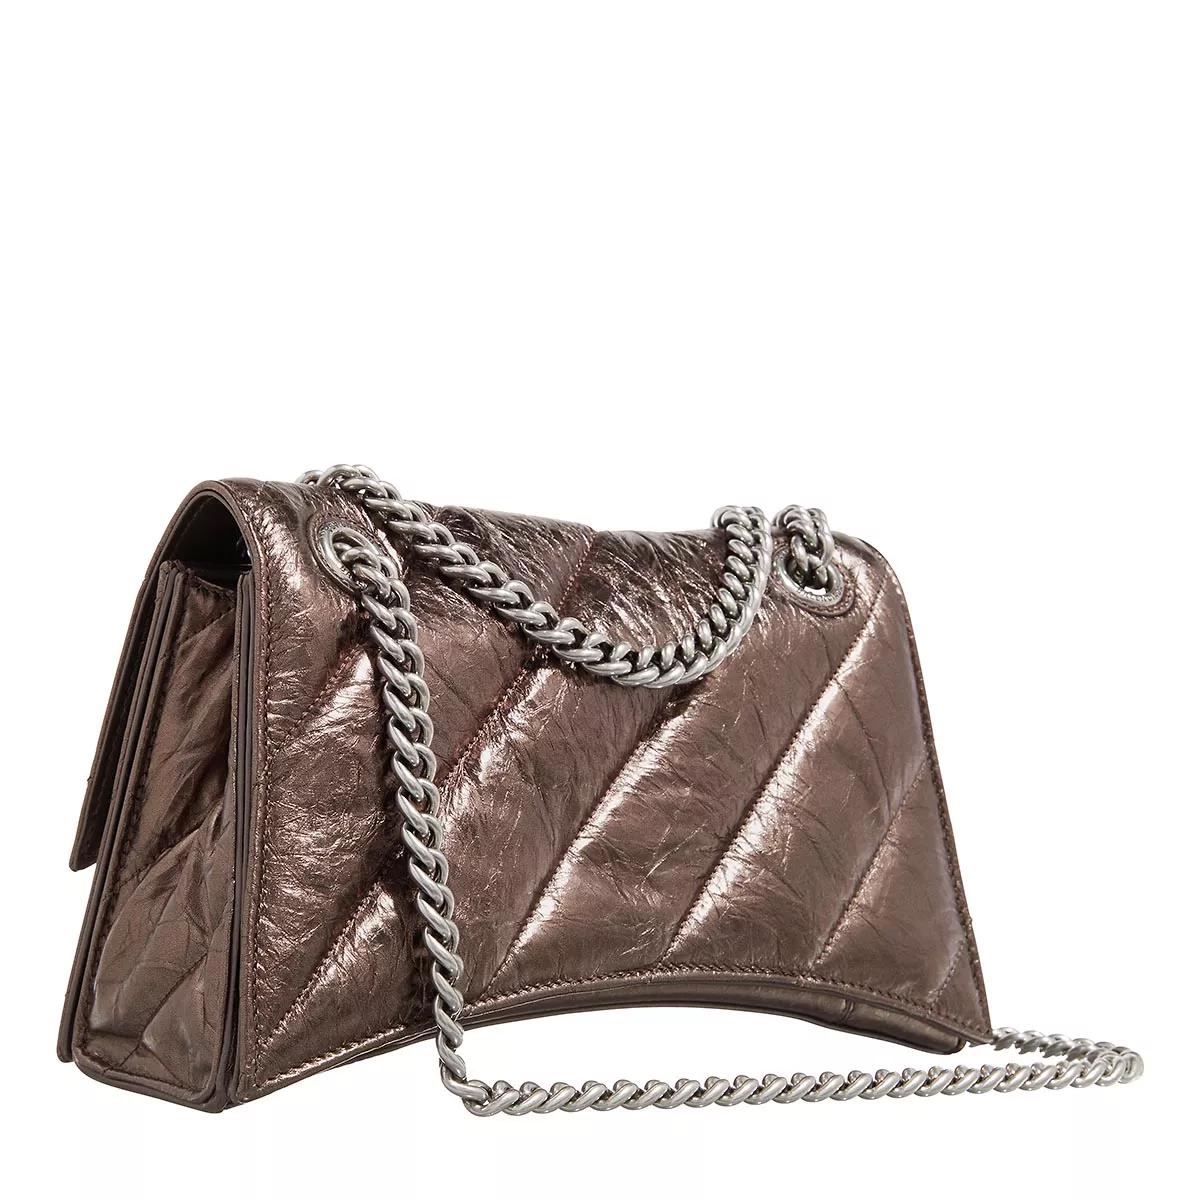 Balenciaga Crossbody bags Crush Shoulder Bag in bruin